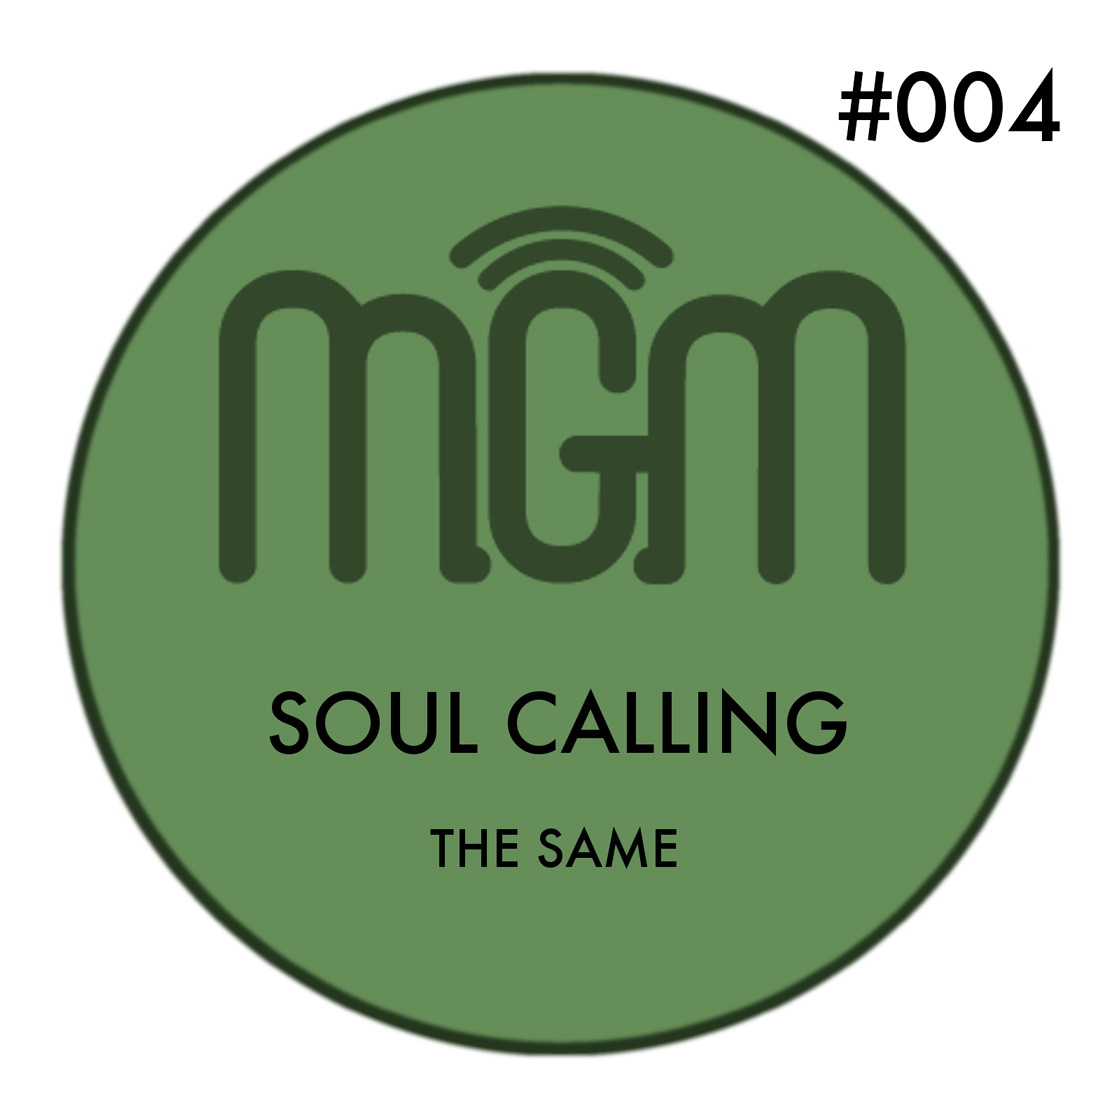 Pobierać The SAME - Soul Calling